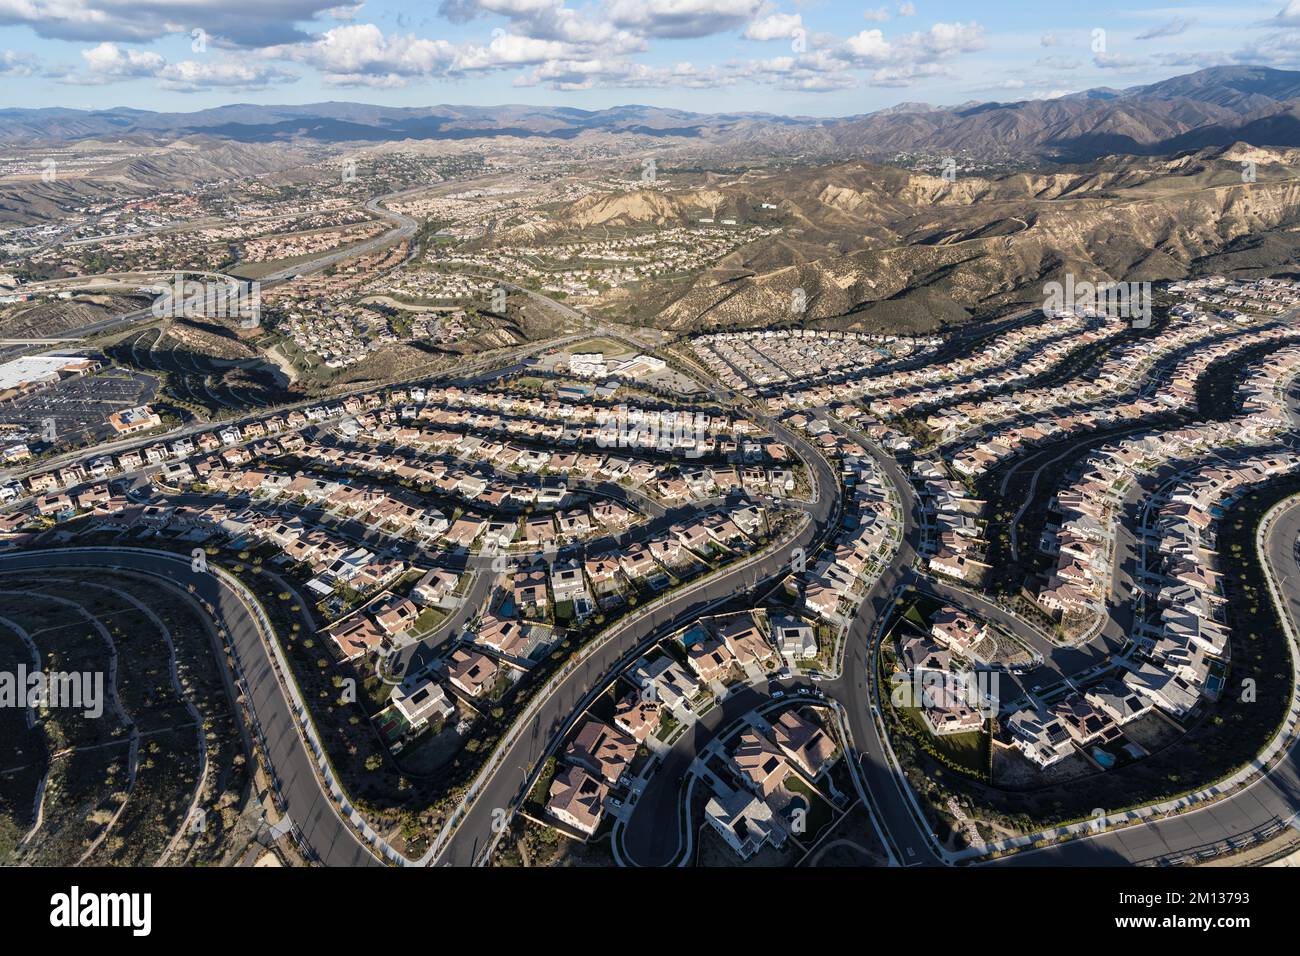 Aerial view of suburban sprawl in the Santa Clarita community of Los Angeles County, California. Stock Photo